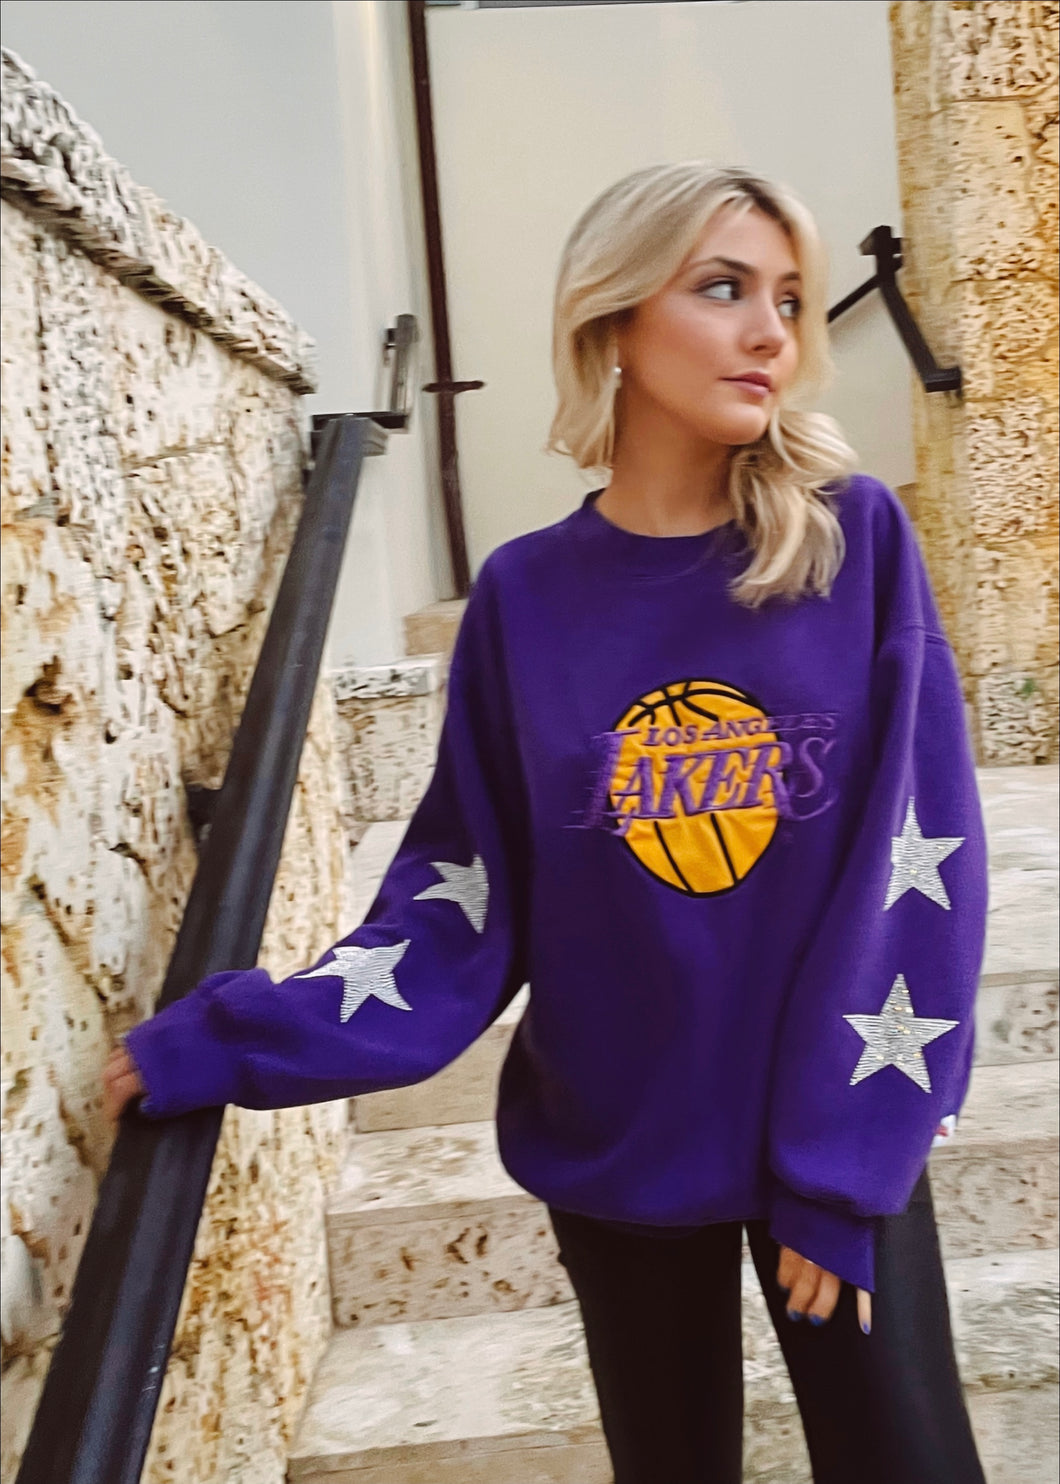 LA Lakers, NBA One of a KIND Vintage Sweatshirt with Crystal Star